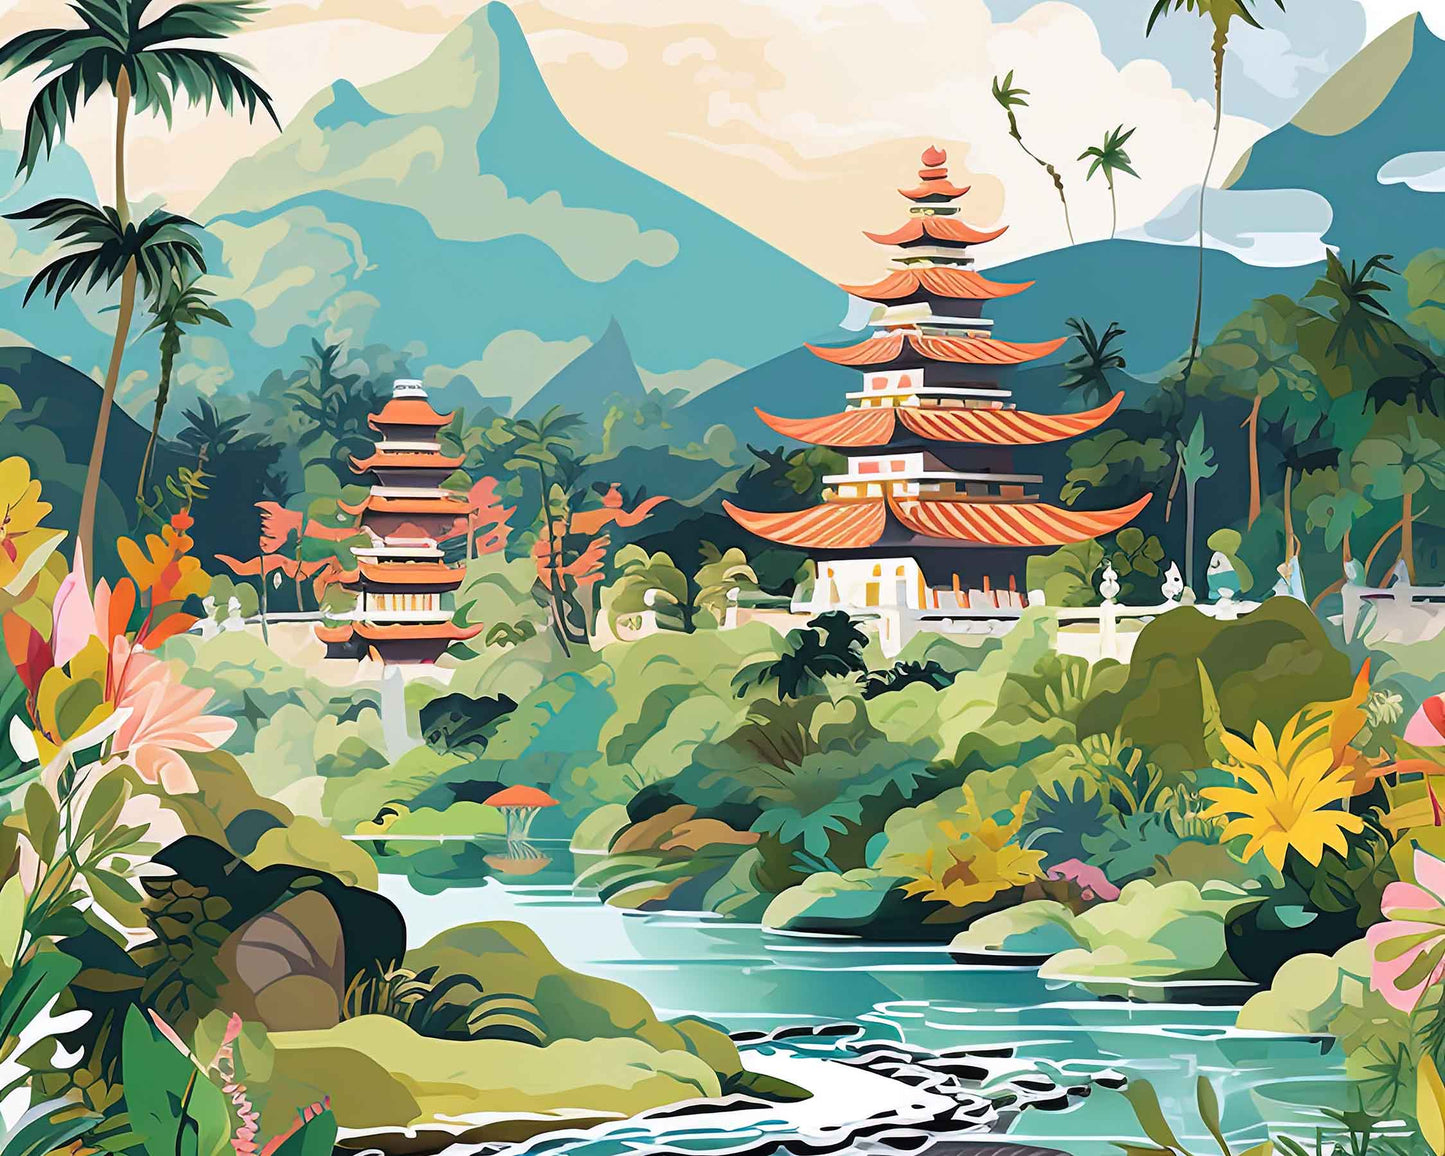 Framed Image of Bali Indonesia Travel Poster Illustration Prints Wall Art